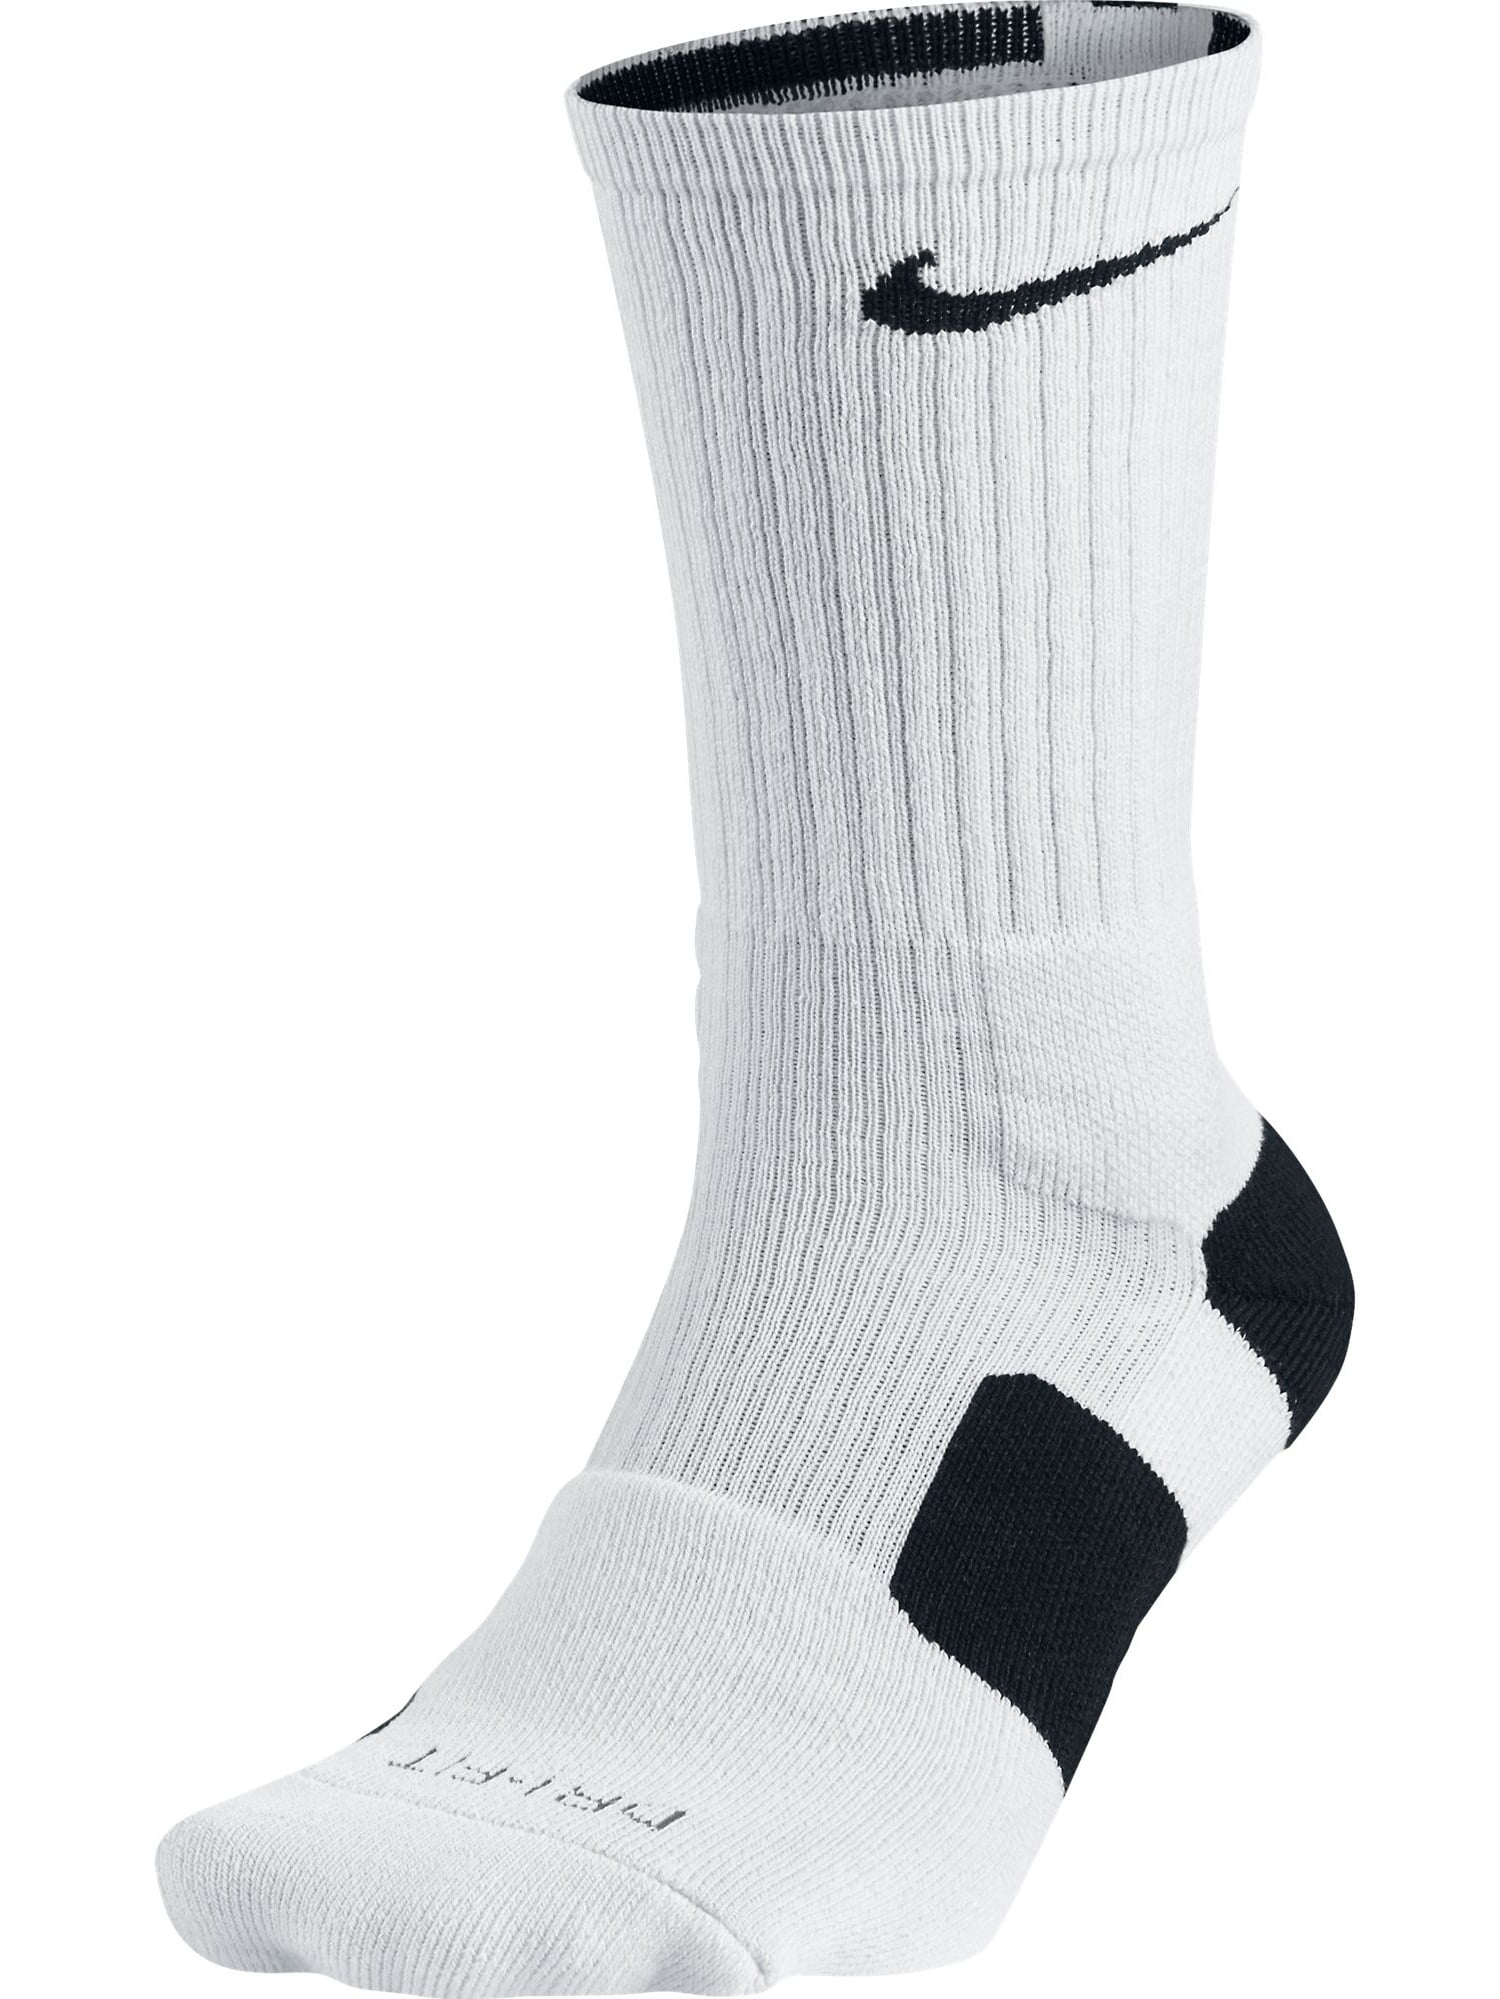 Nike Elite Crew Socks sx3629-107 - Walmart.com